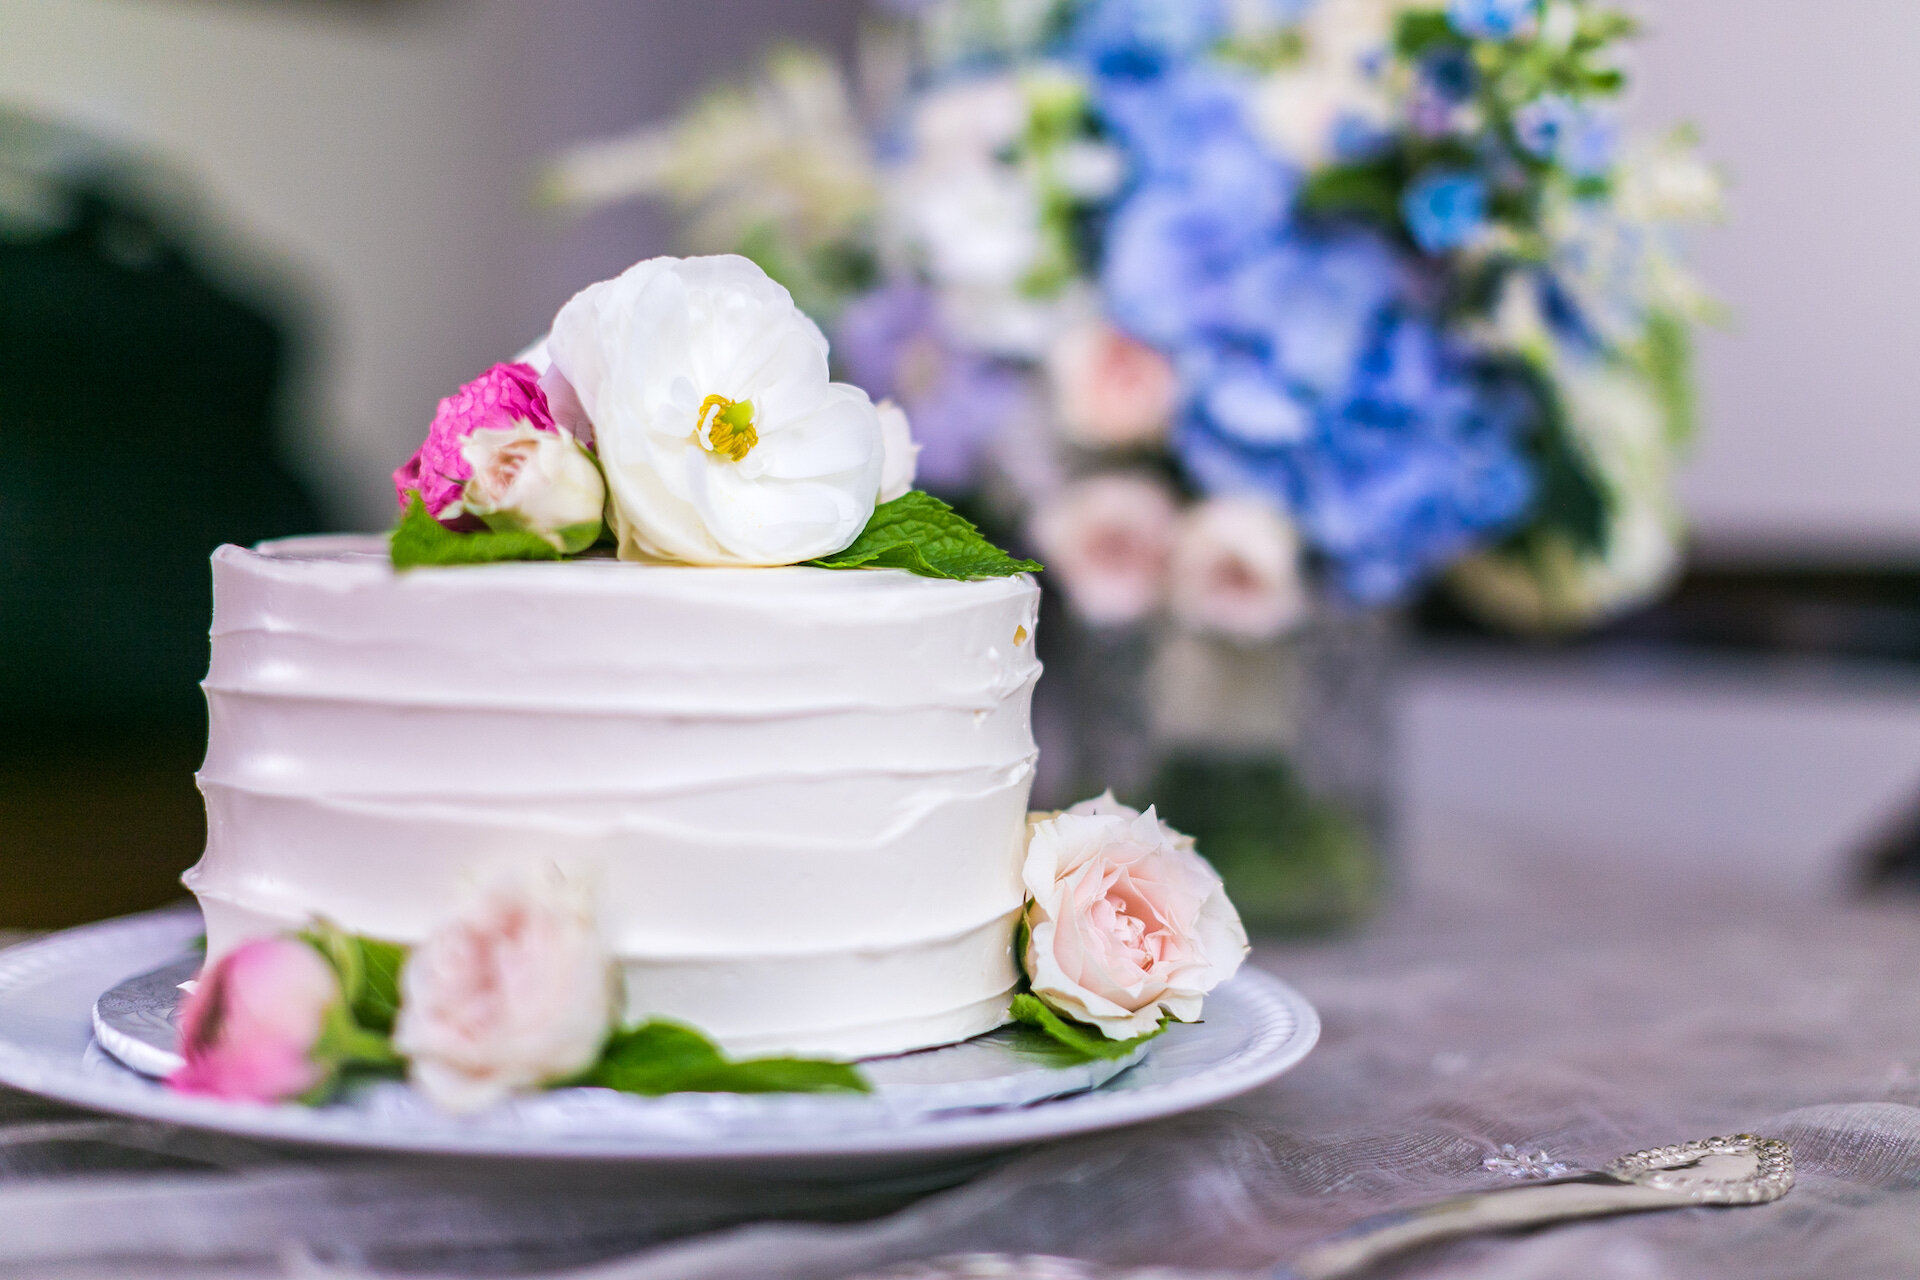 Birthday cake with flowers on it.jpg